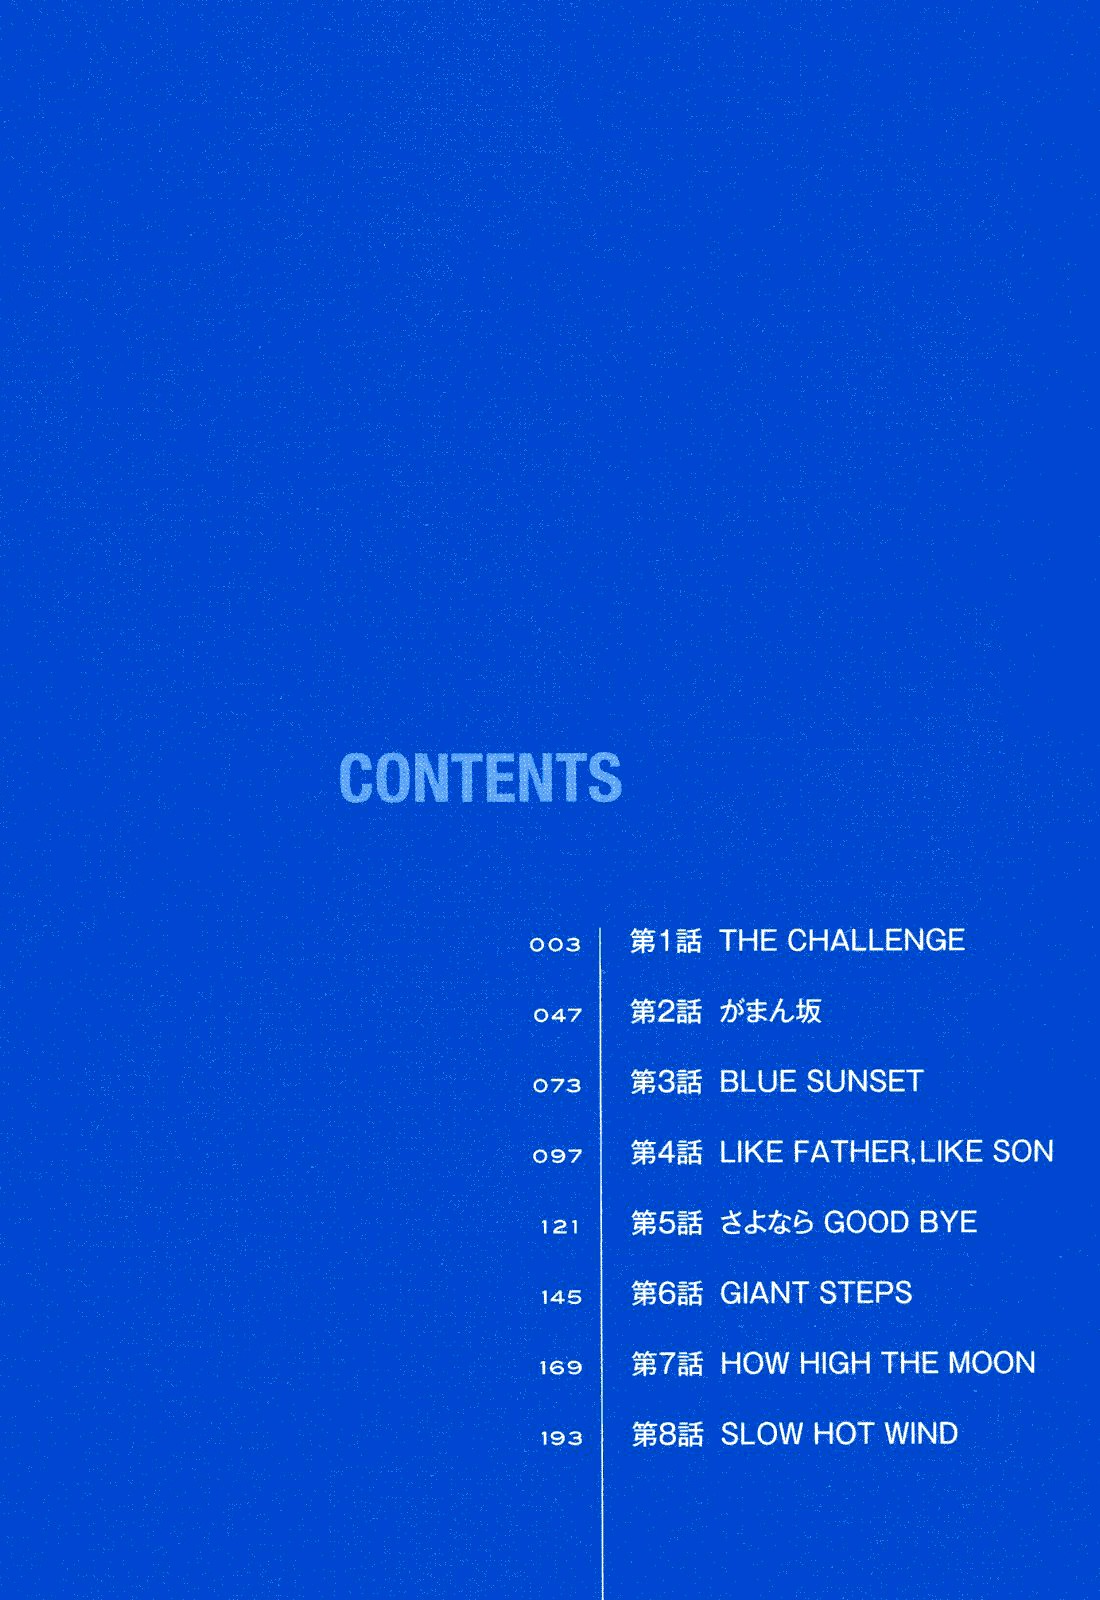 Blue Giant vol.1 ch.1